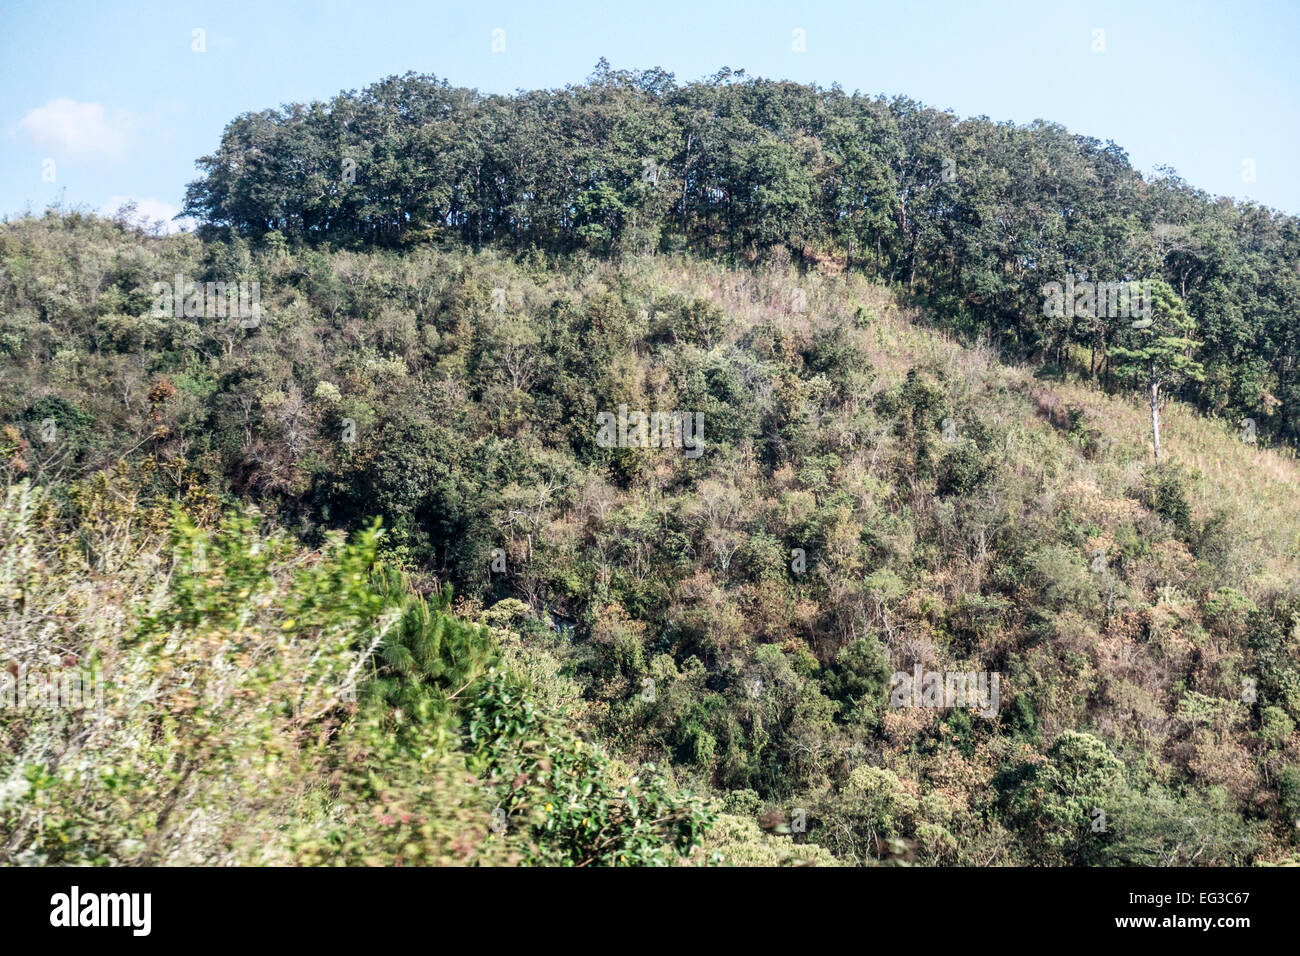 delicate variations in coloring of scrub vegetation on hillside in mountainous countryside near San Cristobal de las Casas Stock Photo